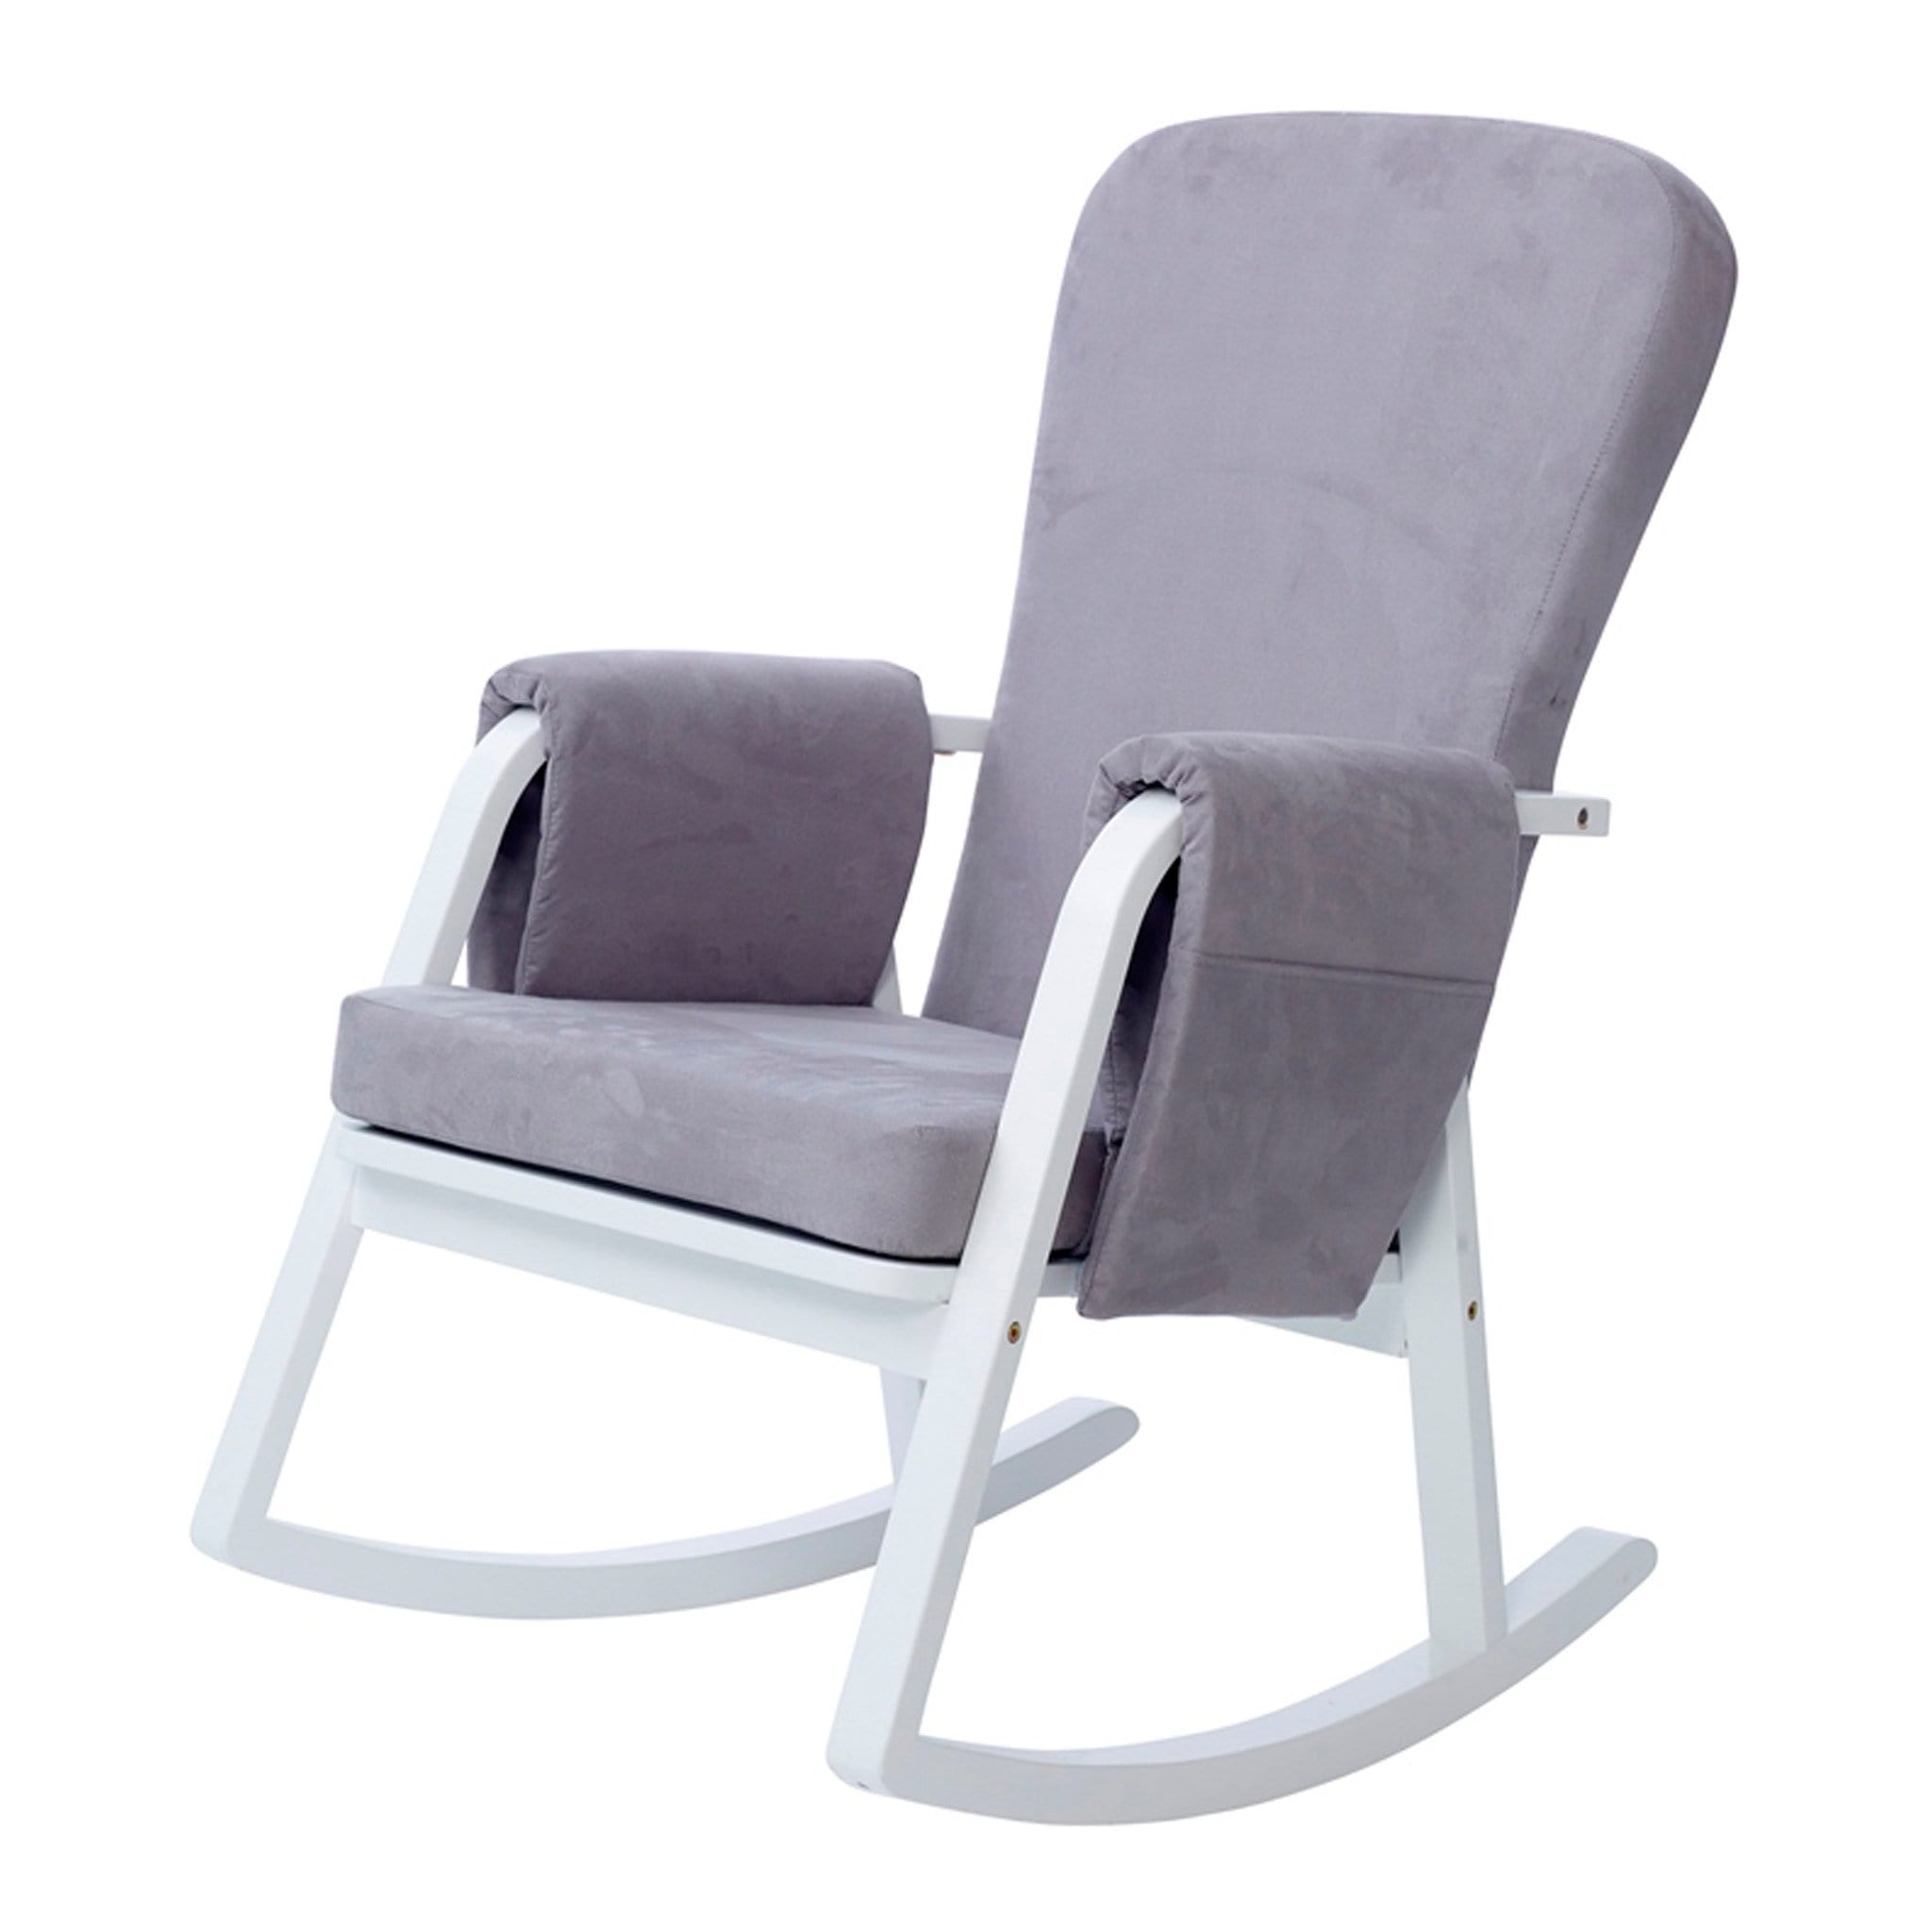 Ickle Bubba Dursley Rocking Chair Pearl Grey Nursing Chairs 48-004-000-840 5060738074303